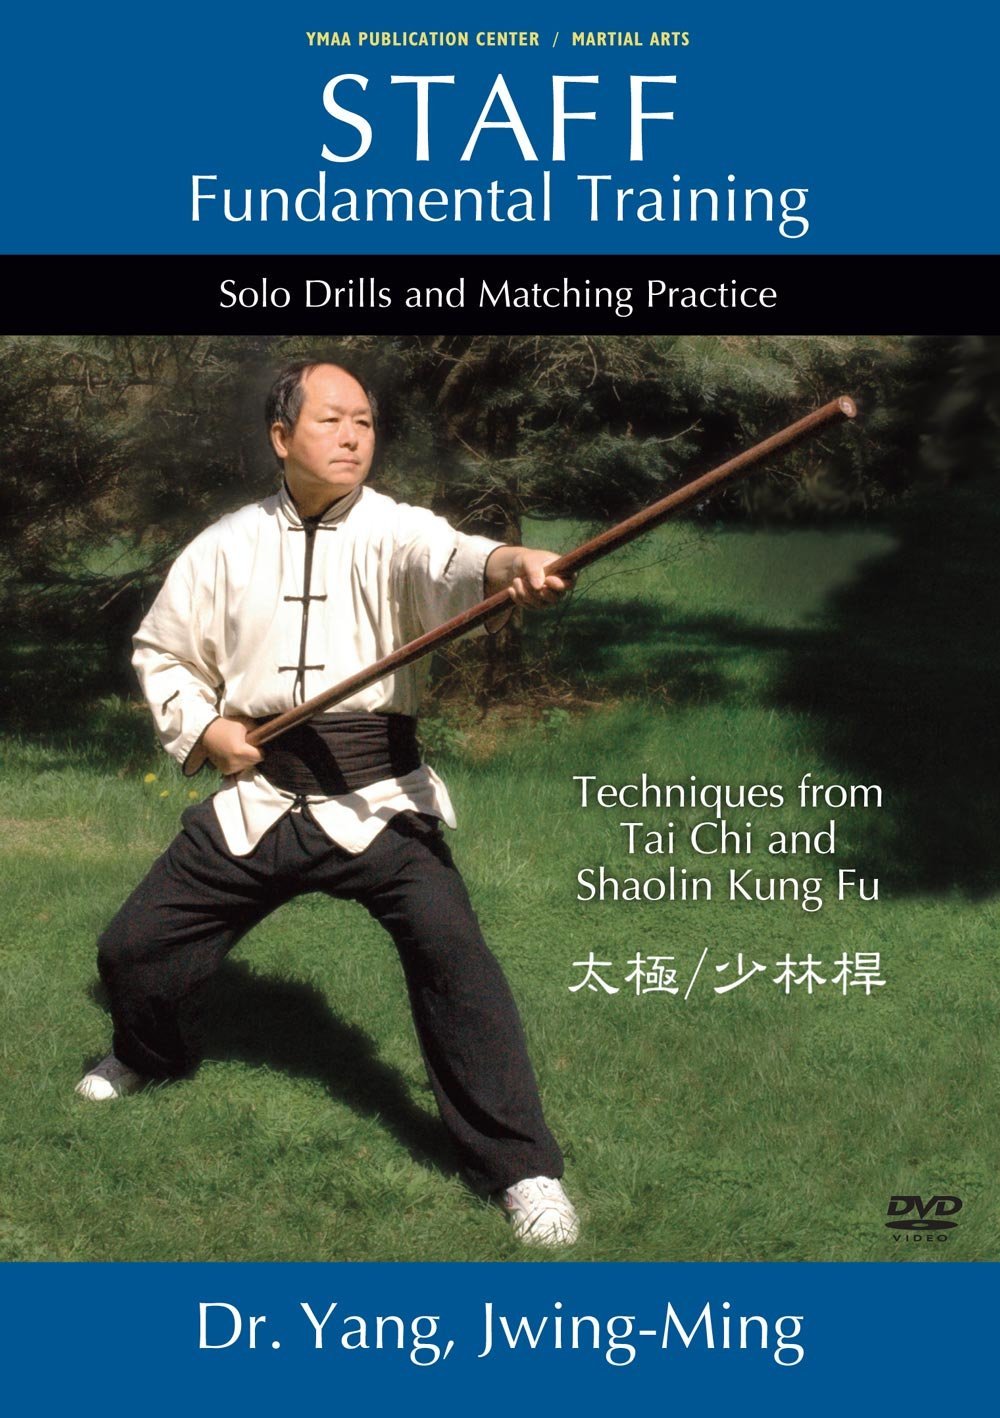 Staff Fundamental Training with Dr. Yang, Jwing-Ming.